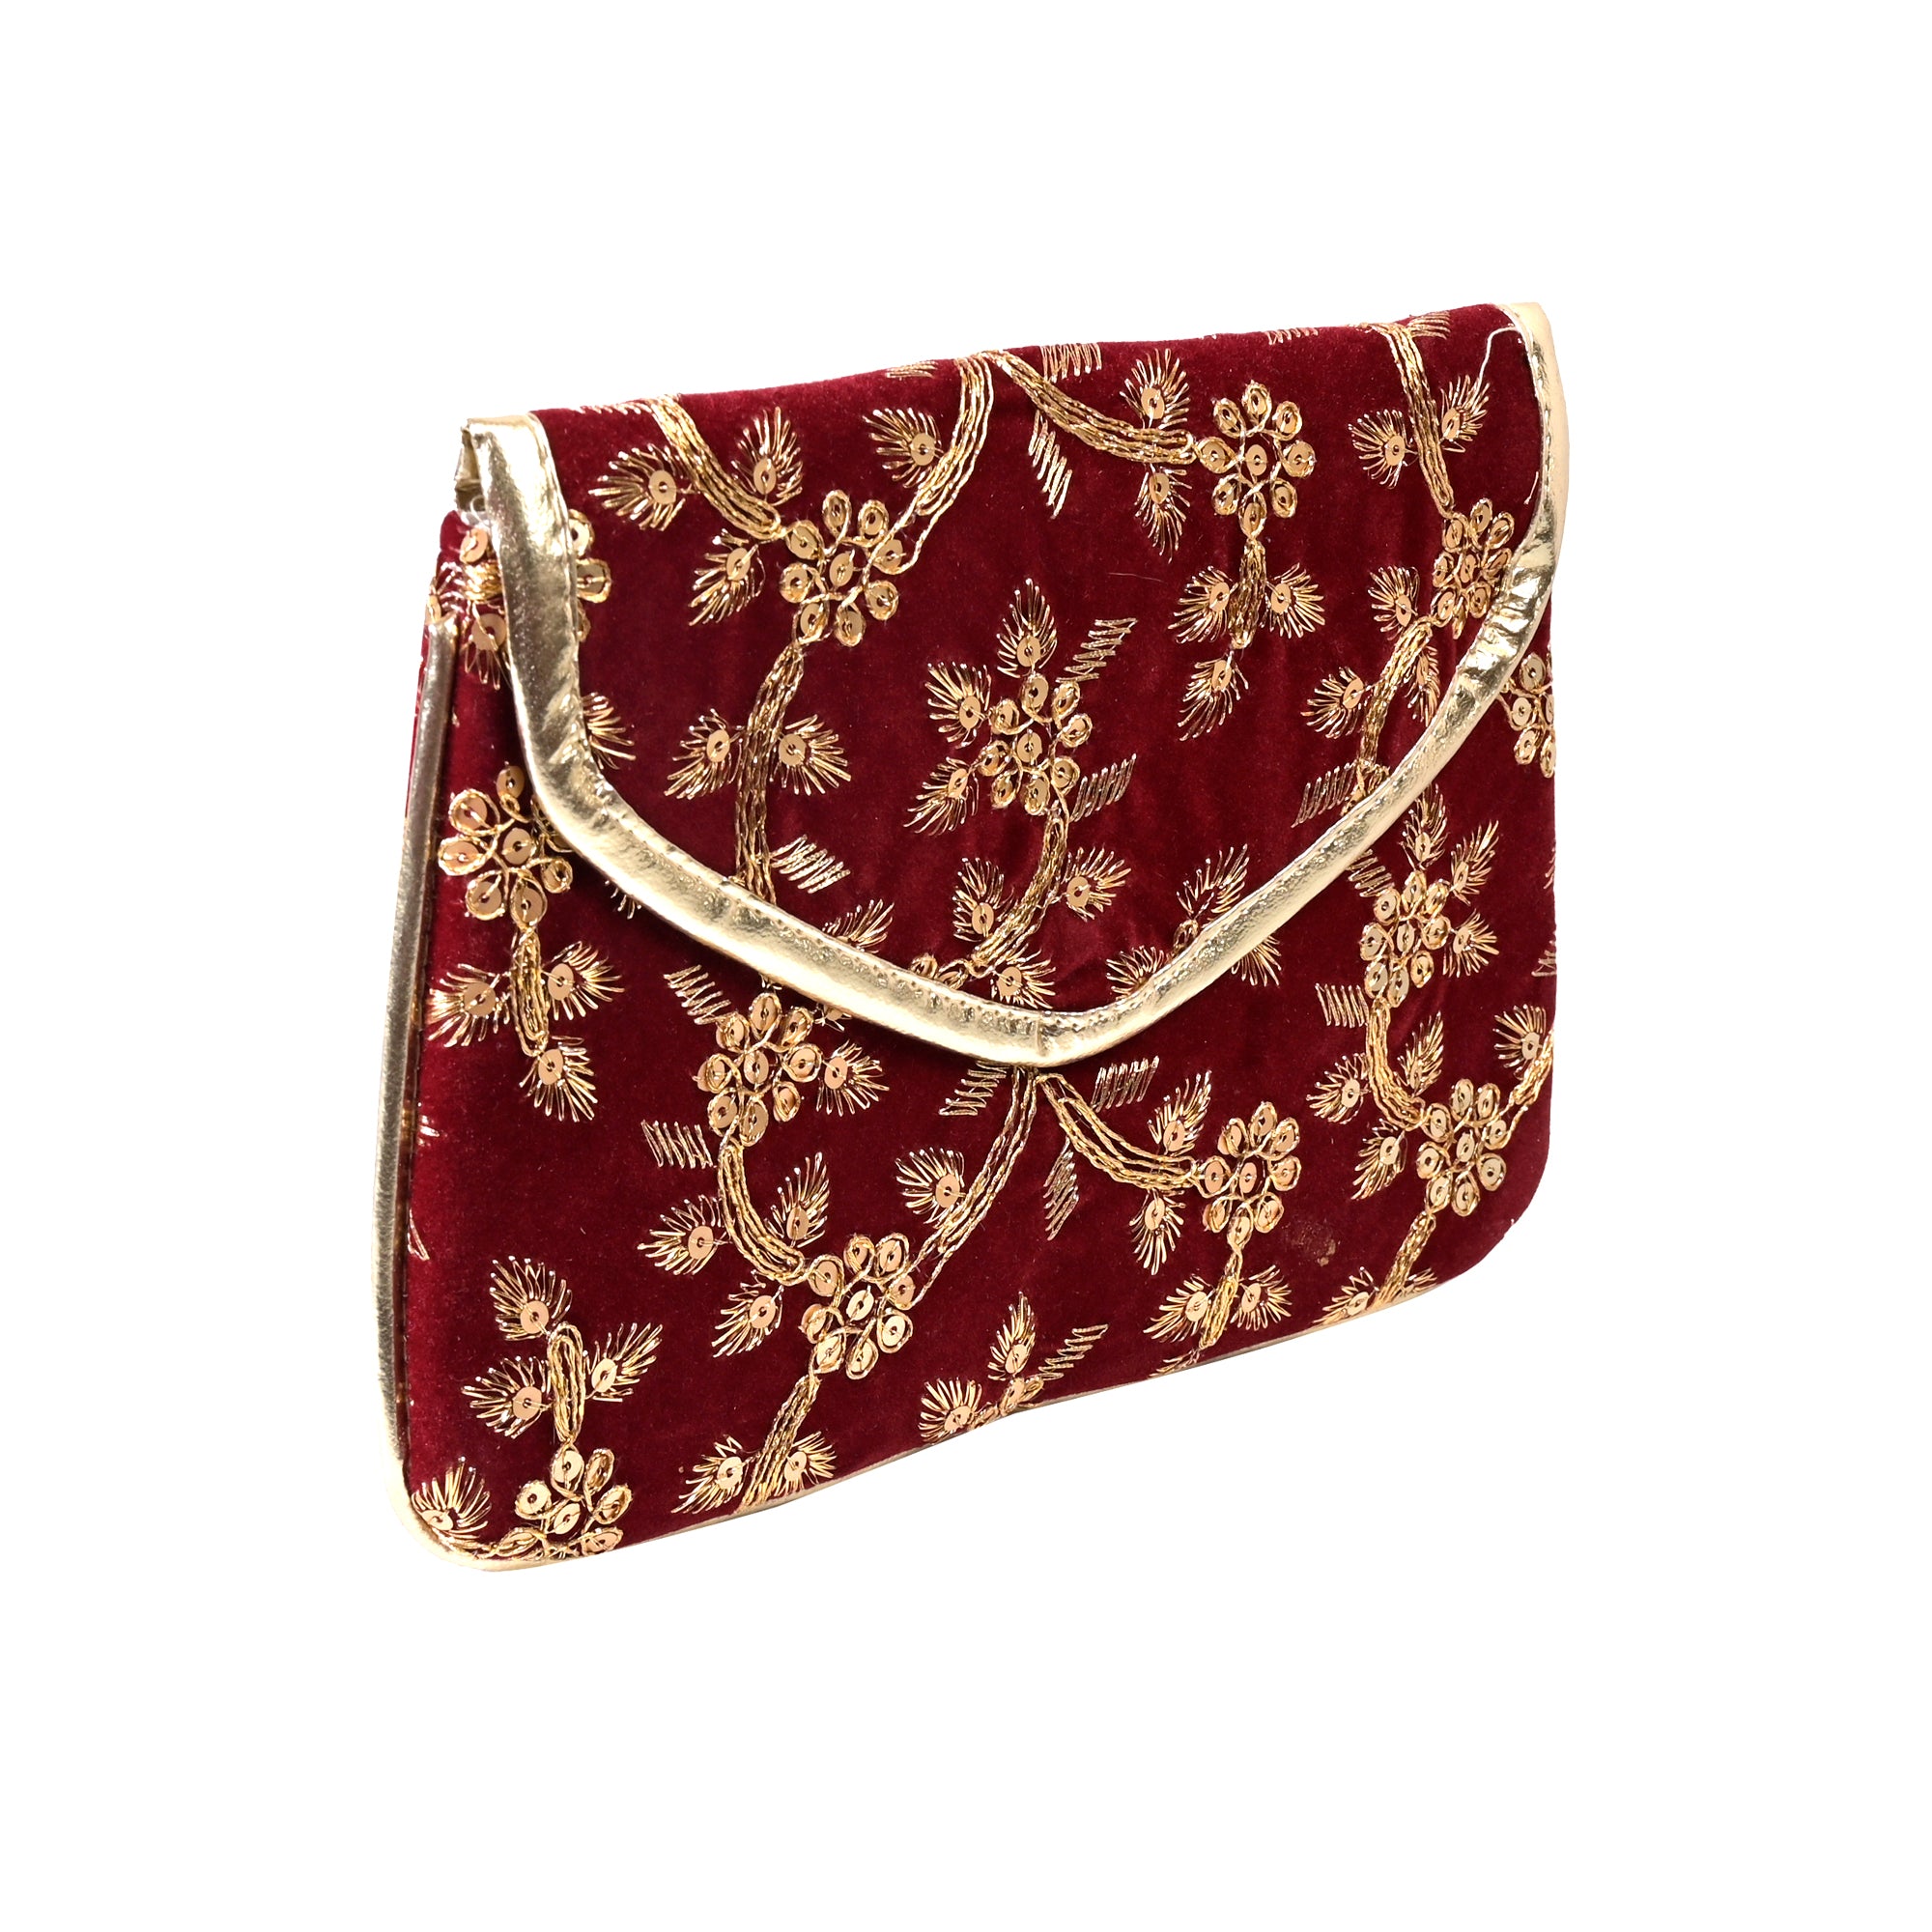 Bridal Purse | Fancy clutch purse, Bags, Brides handbag